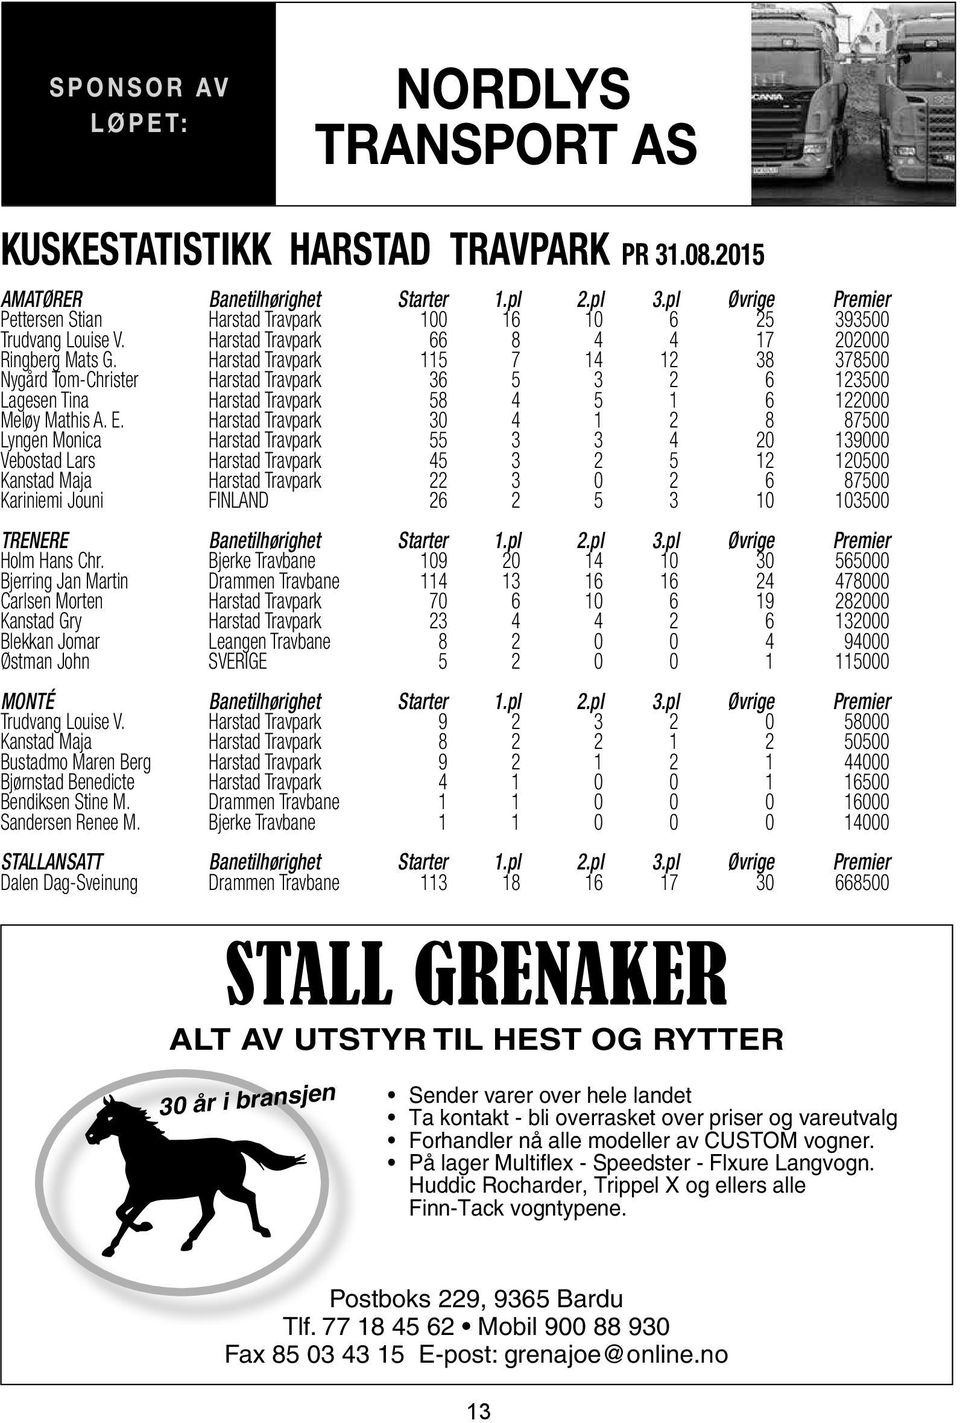 Harstad Travpark 5 7 4 38 378500 Nygård Tom-Christer Harstad Travpark 36 5 3 6 3500 Lagesen Tina Harstad Travpark 58 4 5 6 000 Meløy Mathis A. Utfylling E.